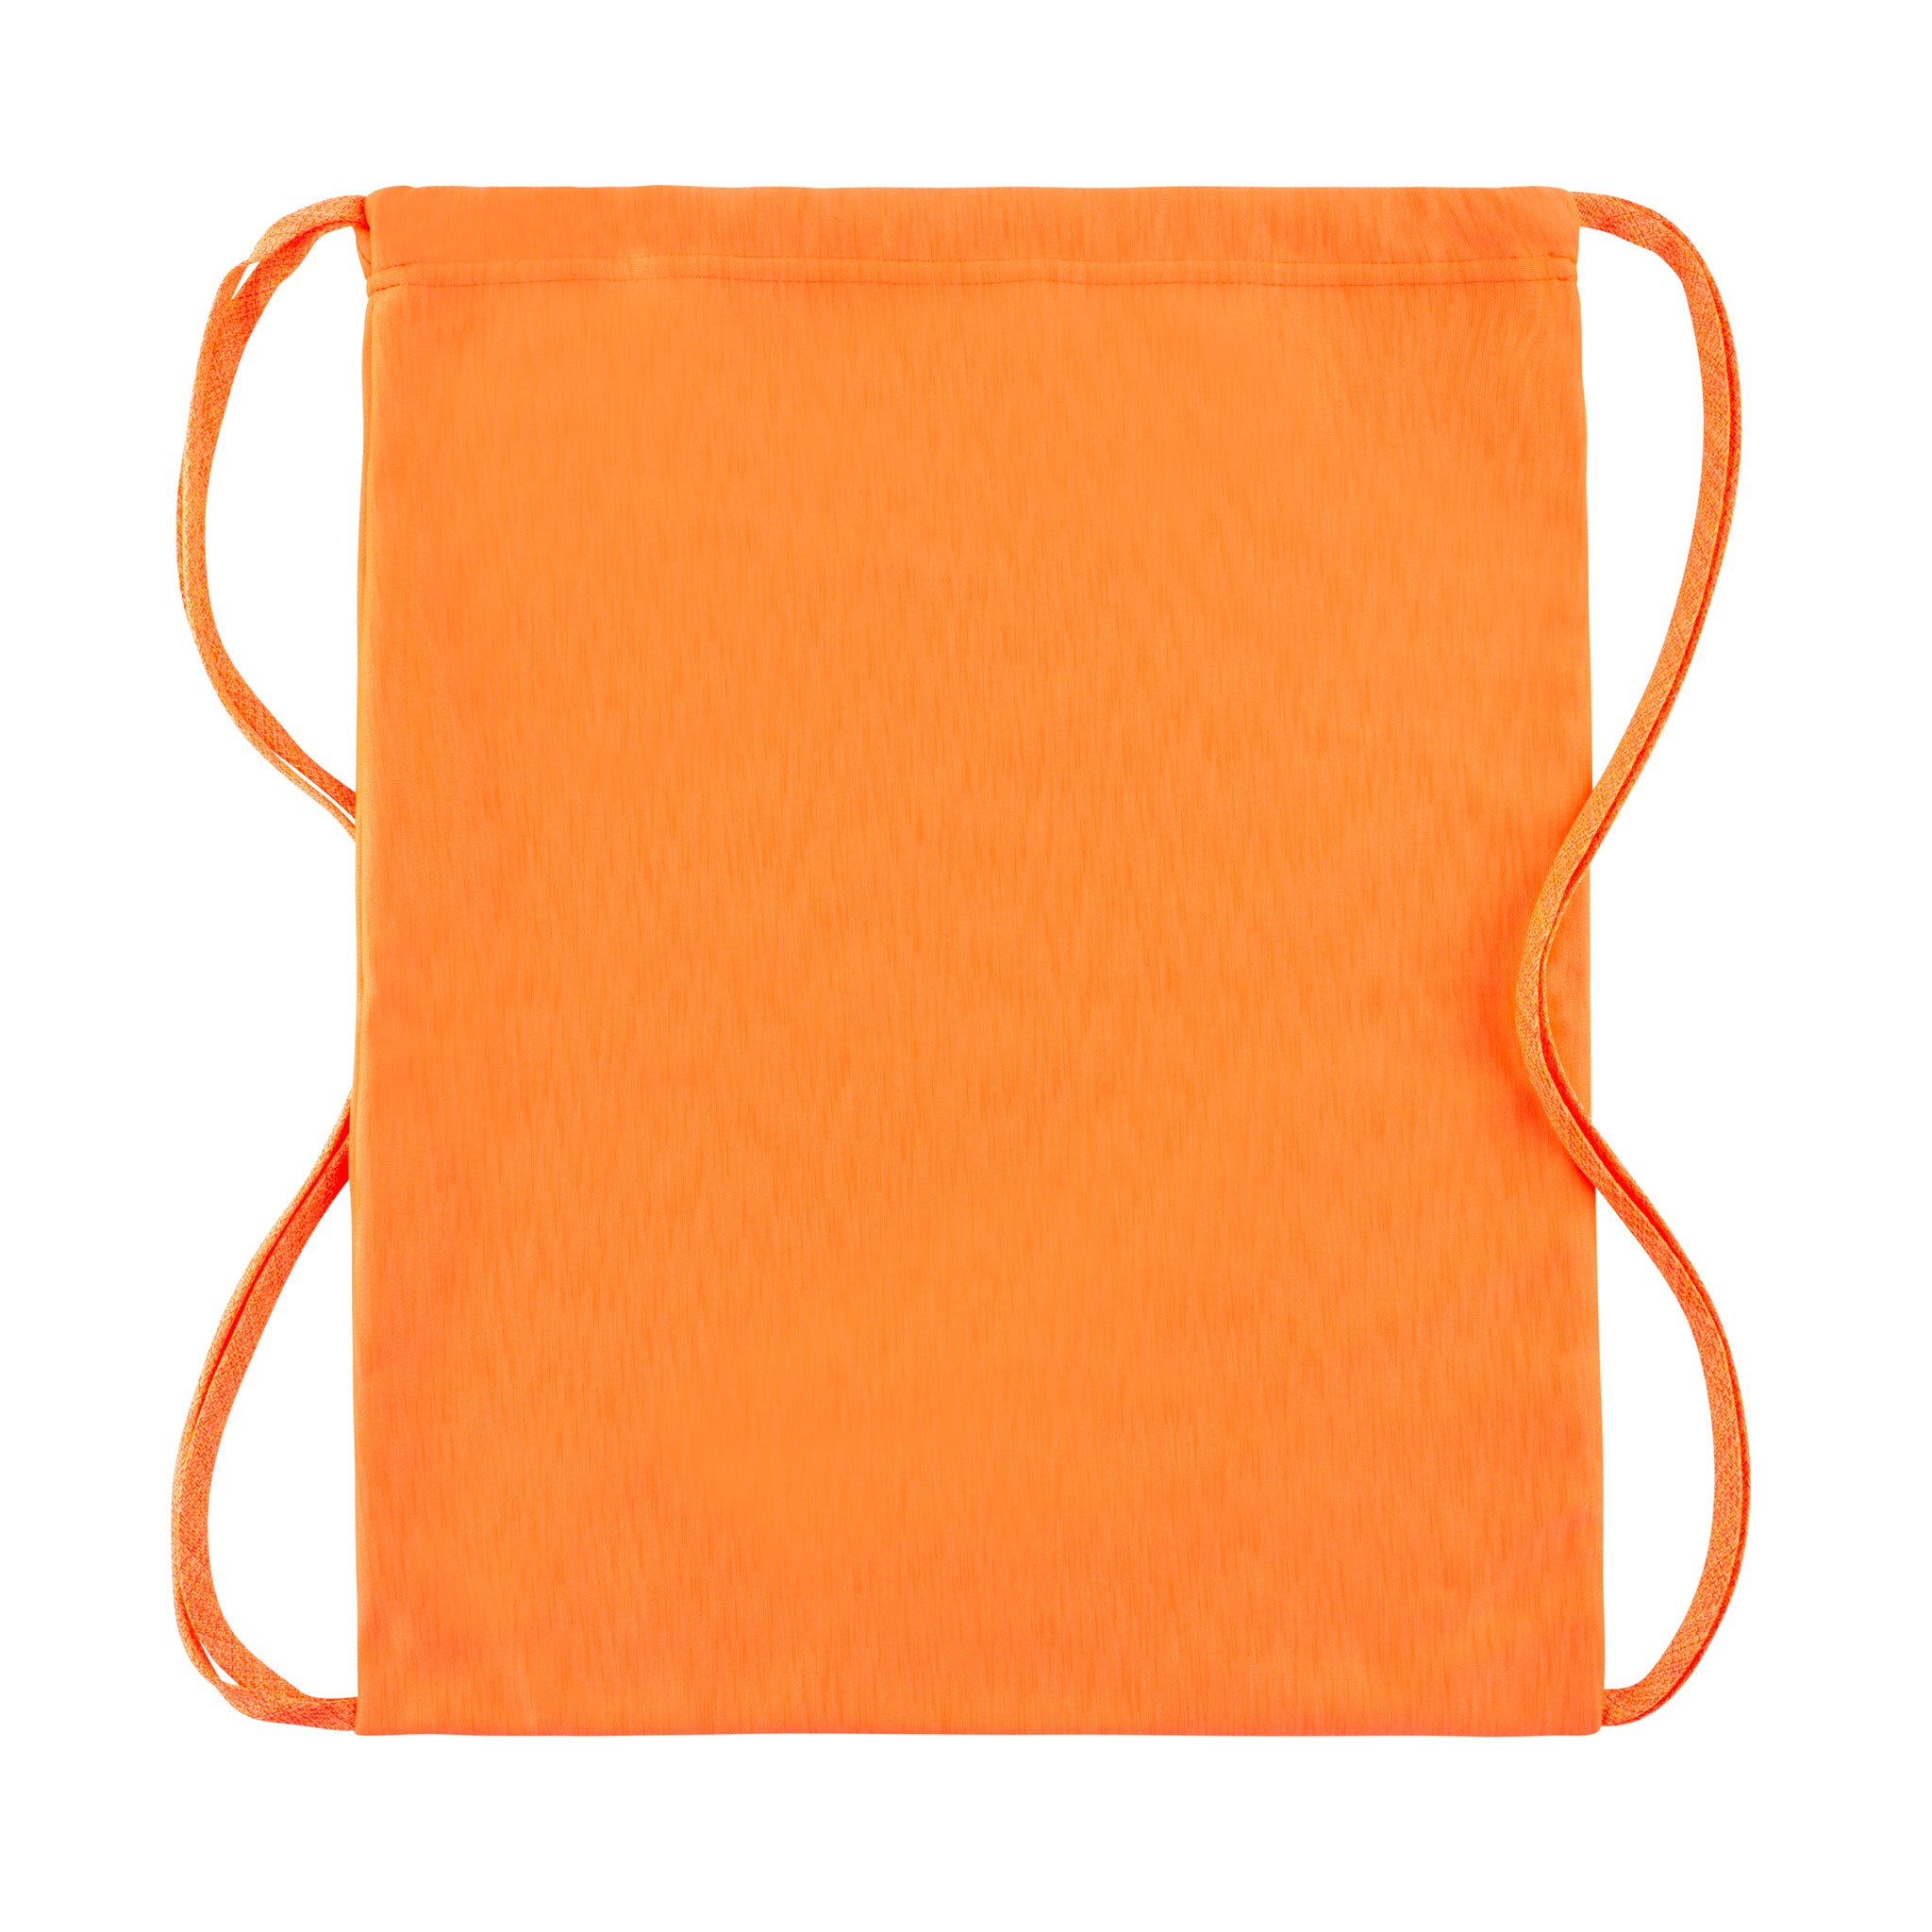 sync-performance-drawstring-bag-back-orange-back